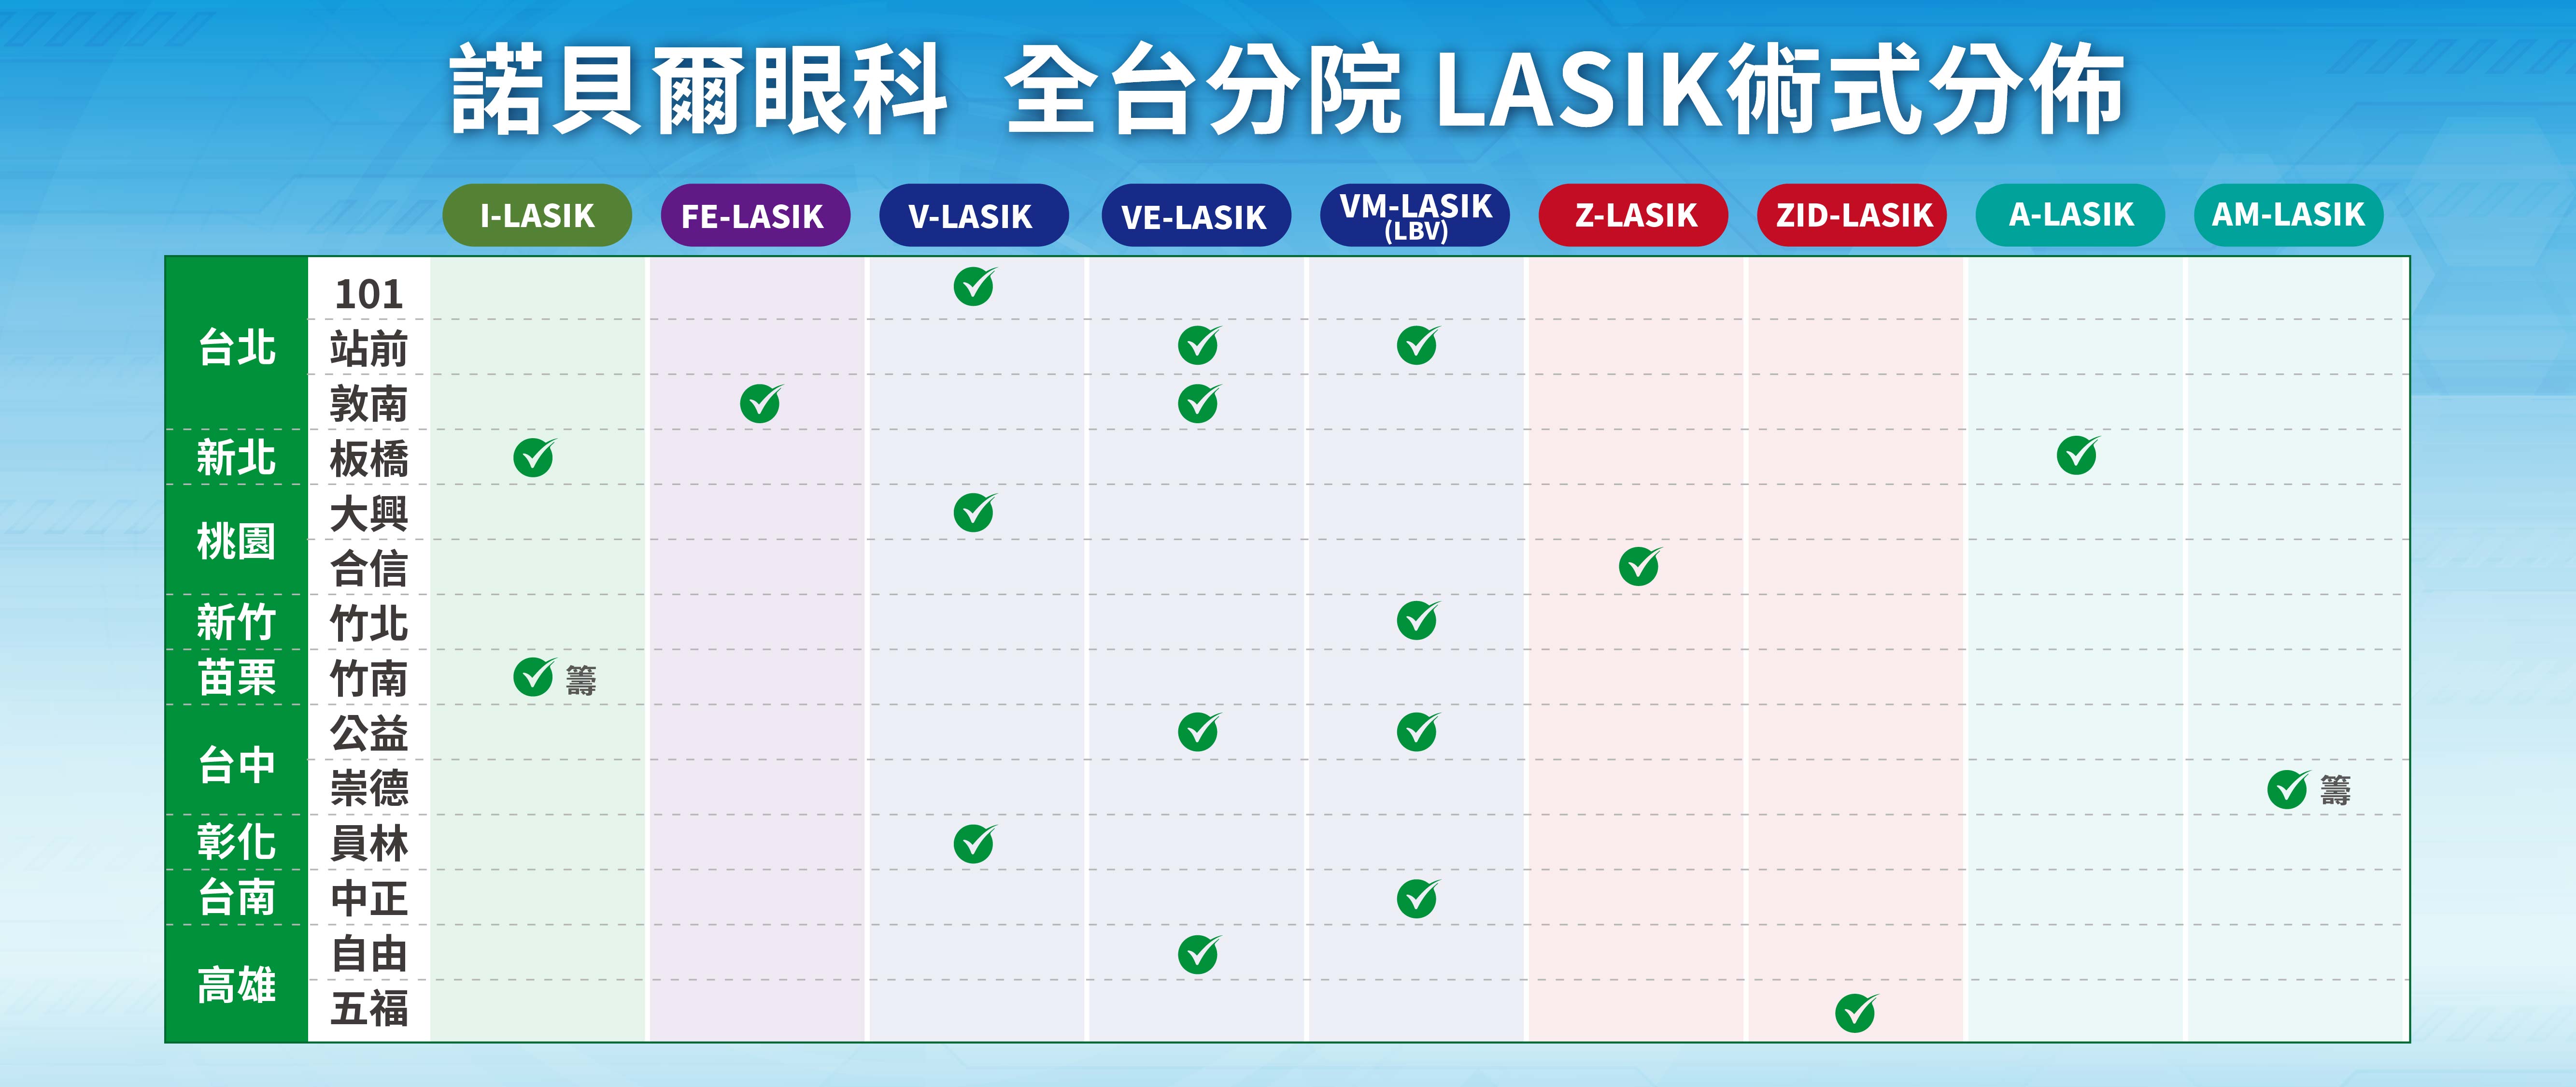 LASIK 全台分院分布